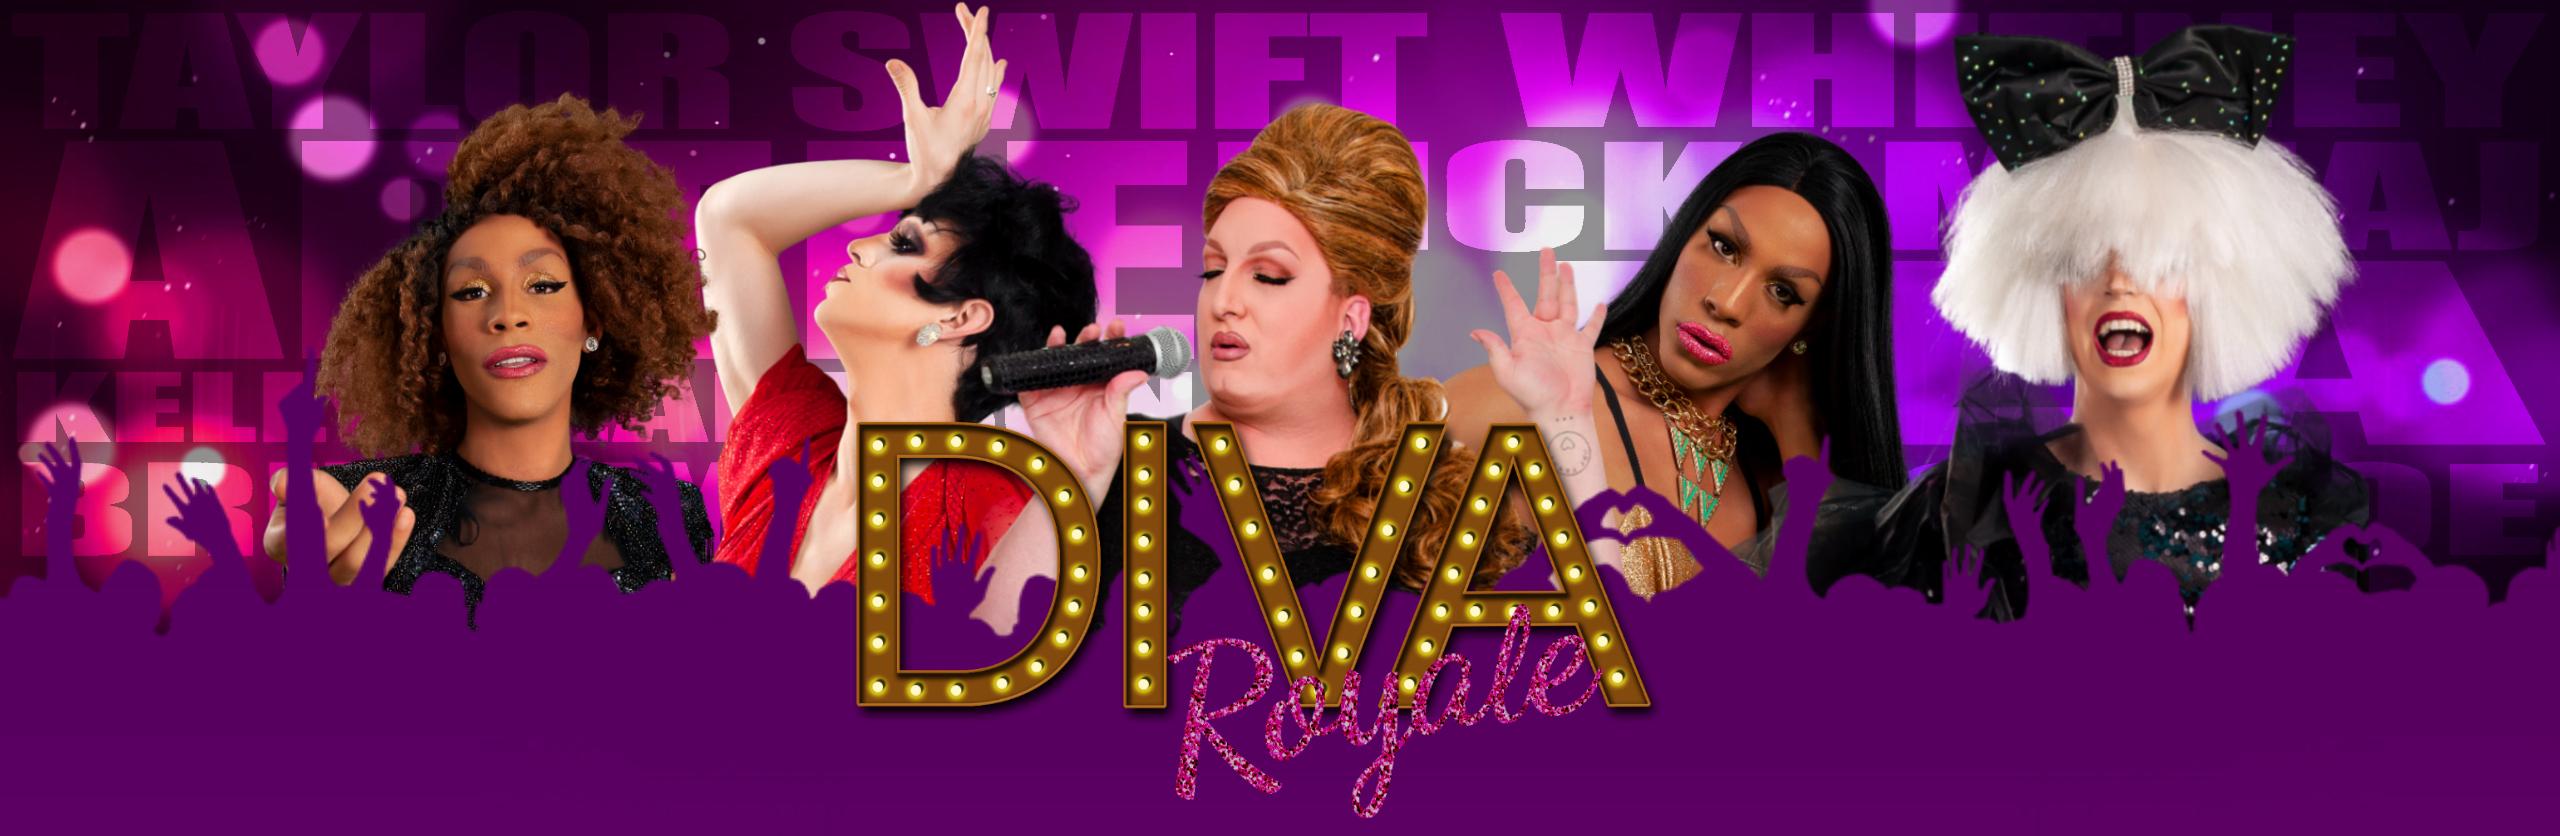 Diva Royale Drag Queen Show Washington, DC - Weekly Drag Queen Shows in Washington - Perfect for Bachelorette & Bachelor Parties